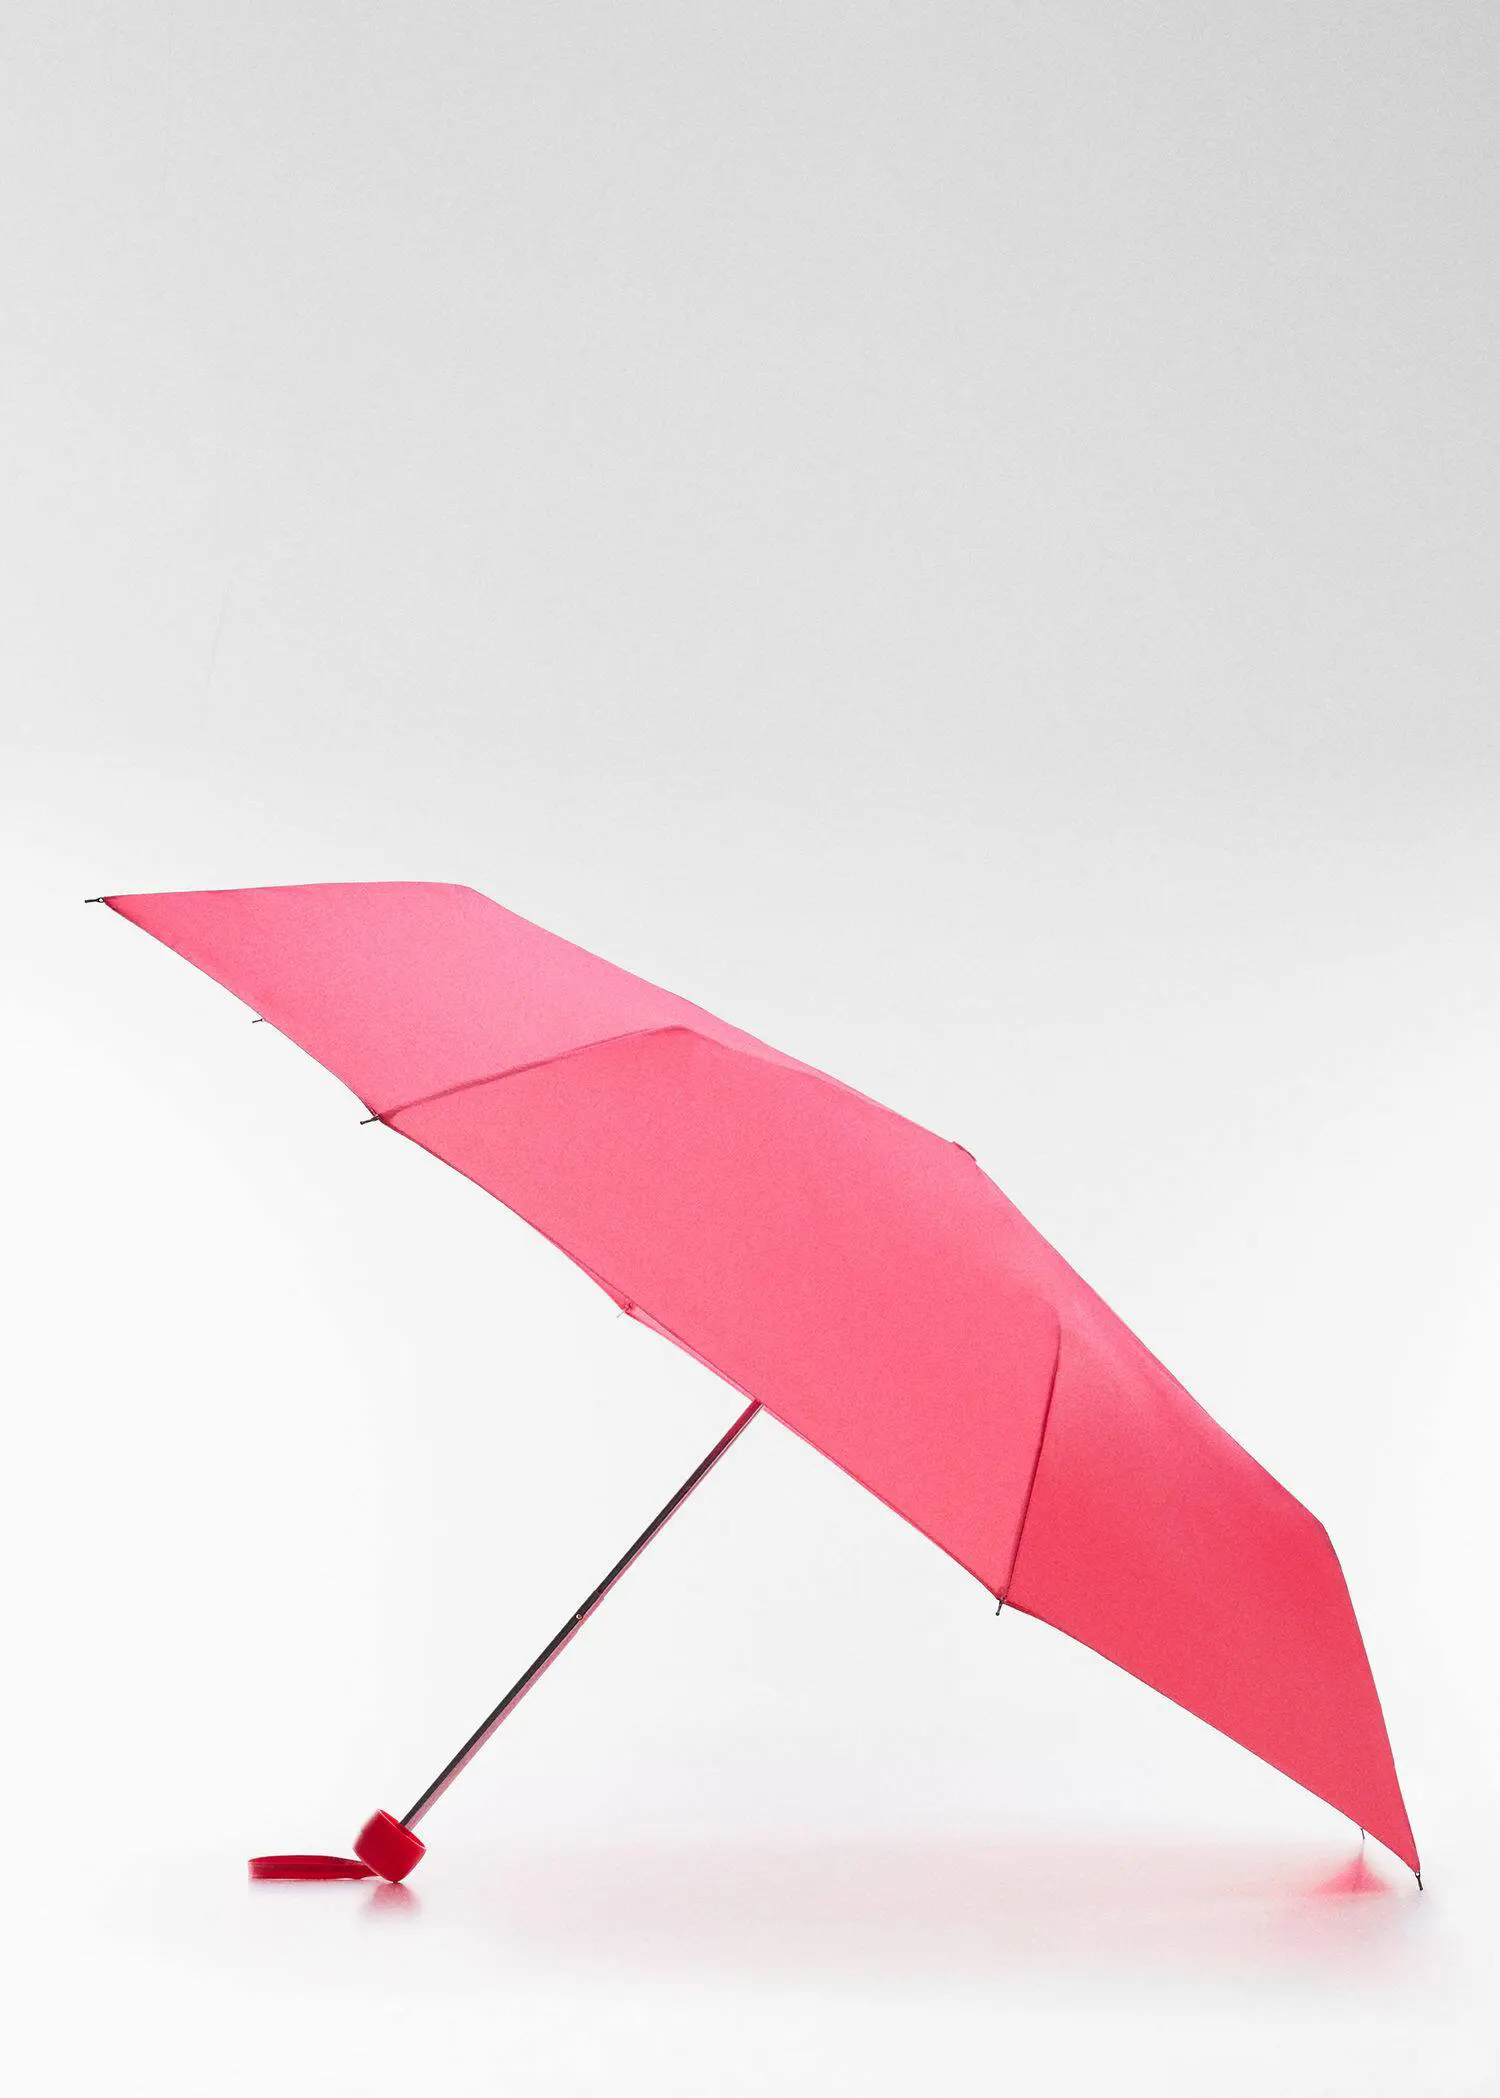 Mango Plain folding umbrella. an open pink umbrella on top of a white surface. 